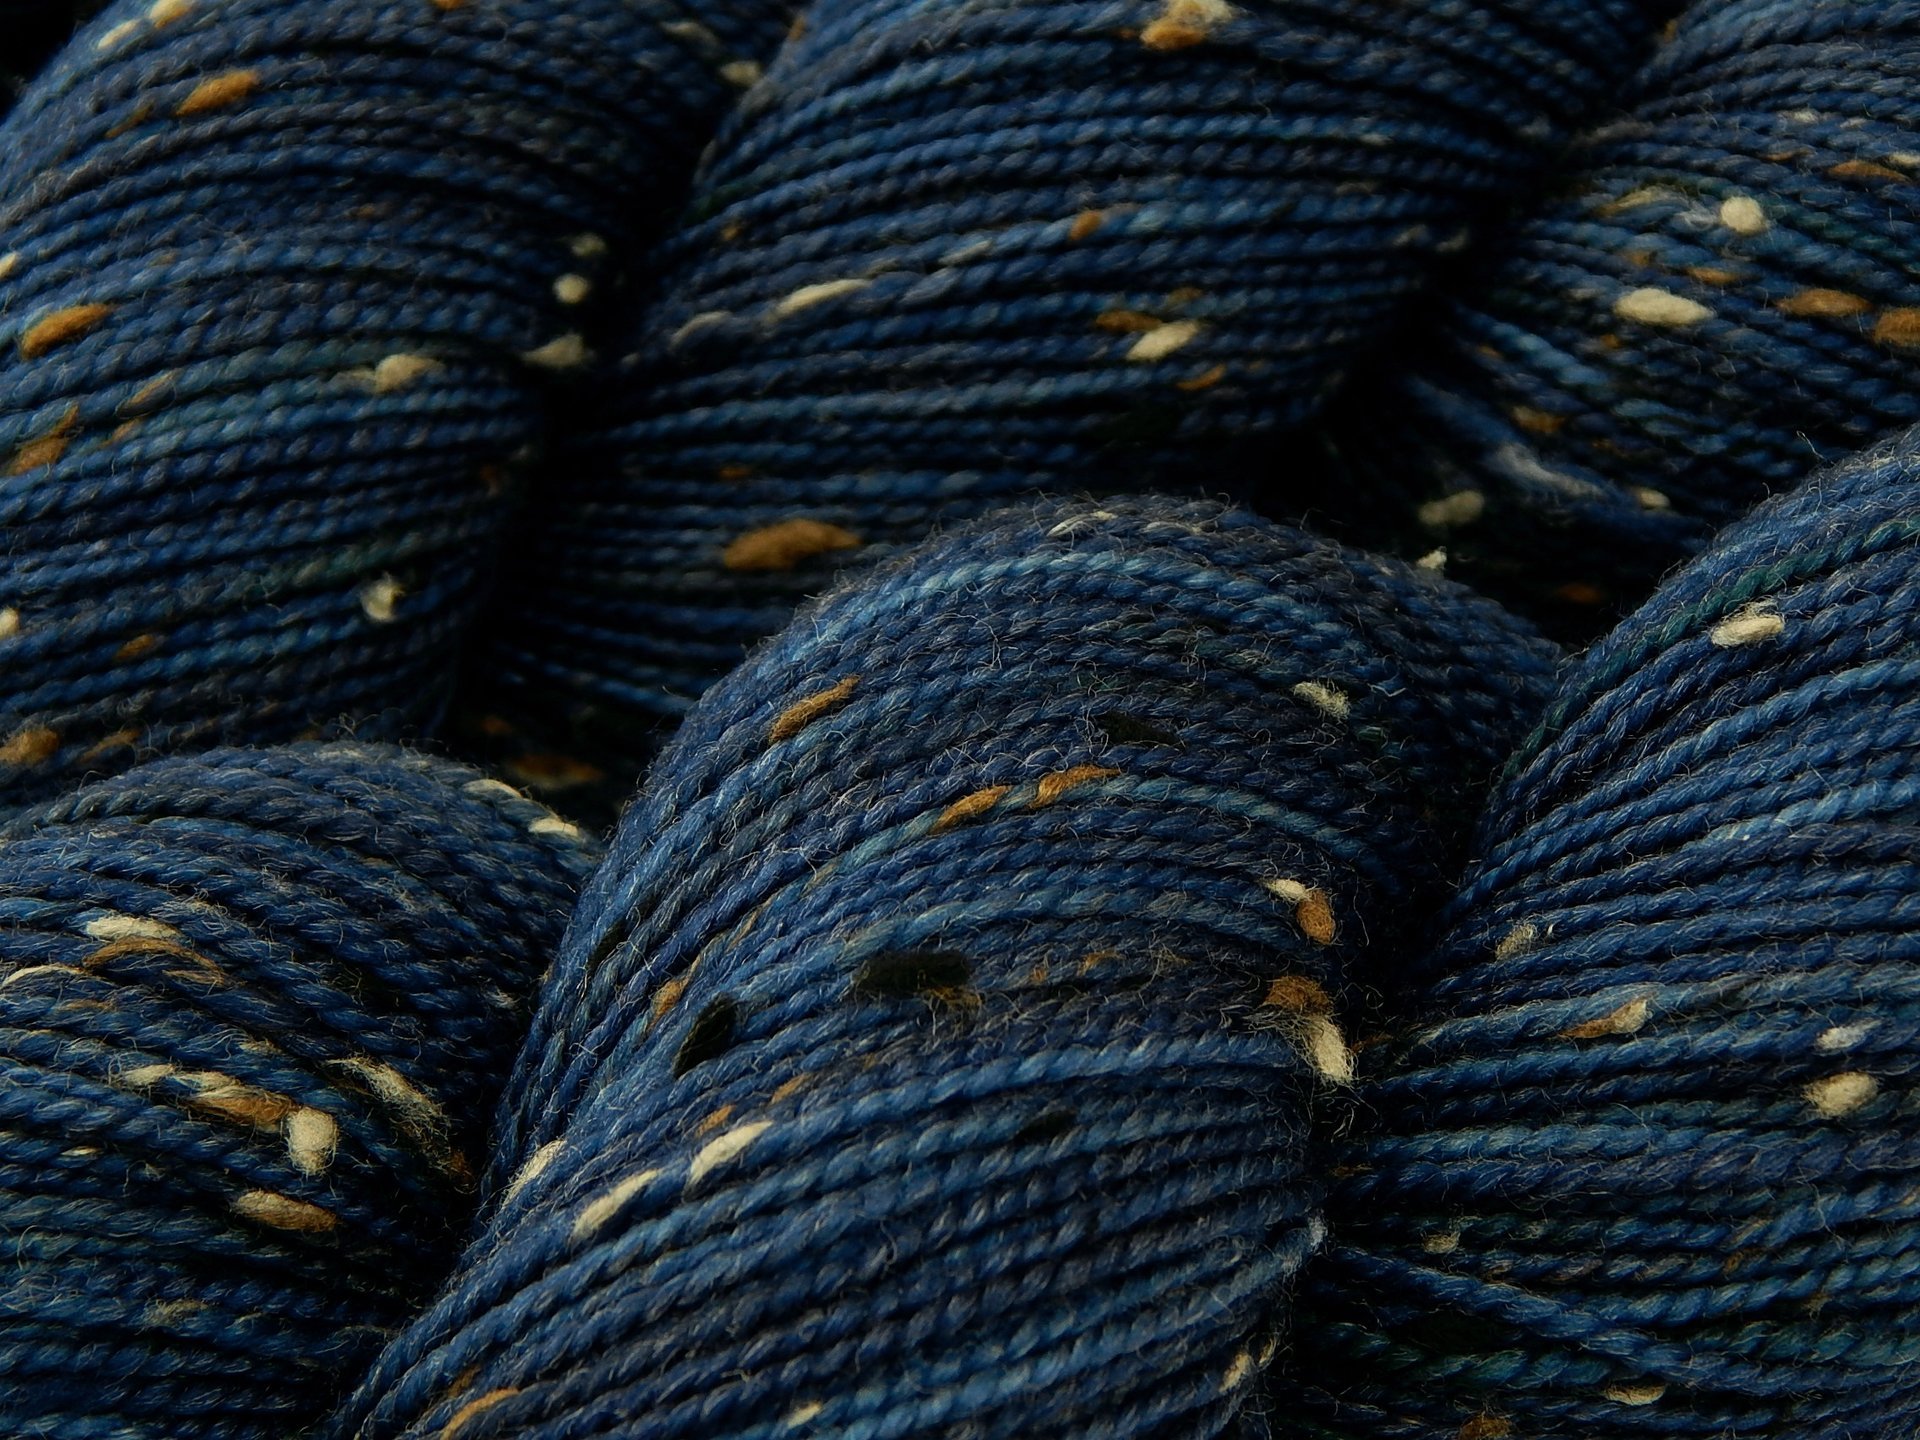 Hand Dyed Yarn, Tweed Fingering Weight Superwash Merino Wool Nylon - Ink Tonal - Indie Dyer Knitting Yarn, Navy Blue Flecks Sock Yarn